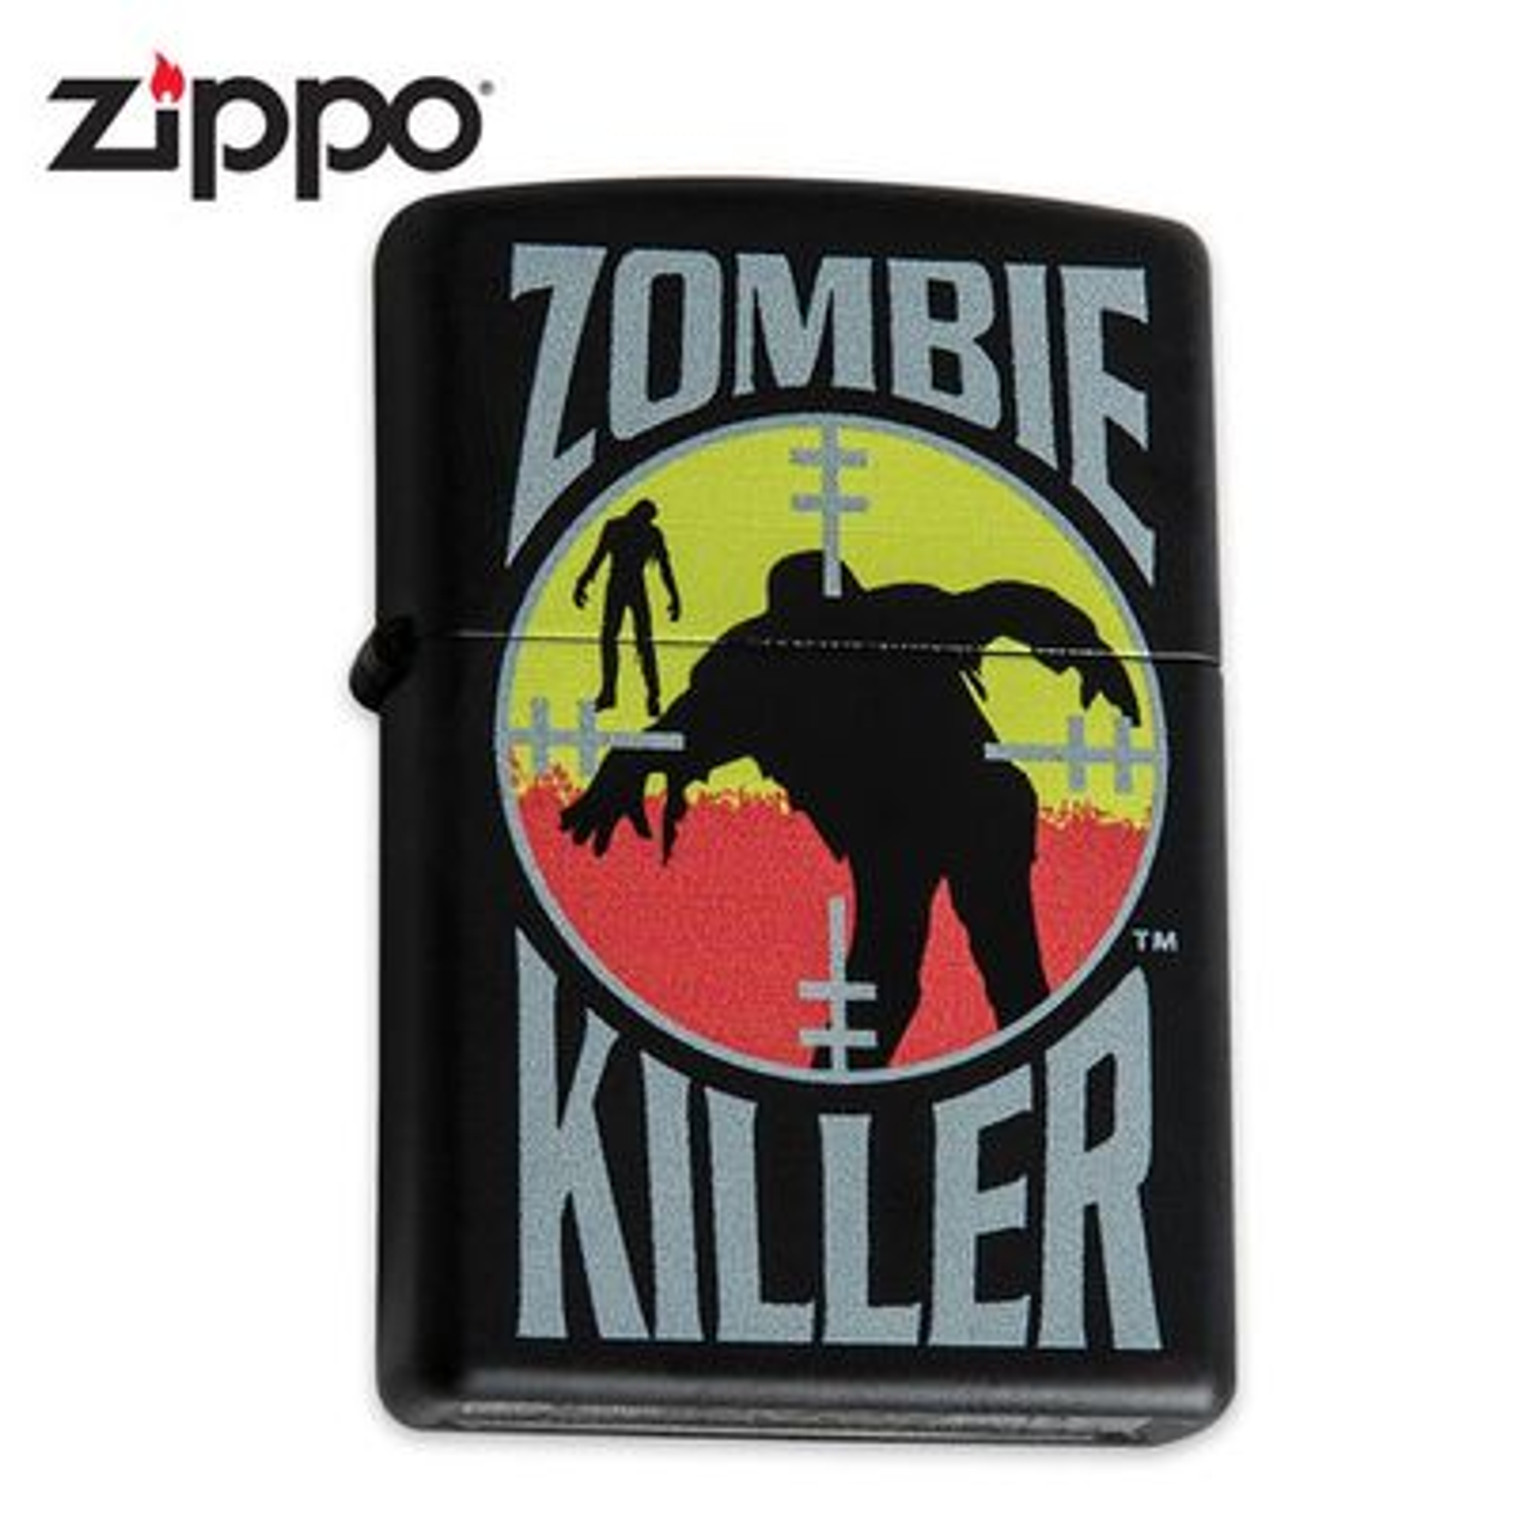 Zippo Zombie Killer  Lighter